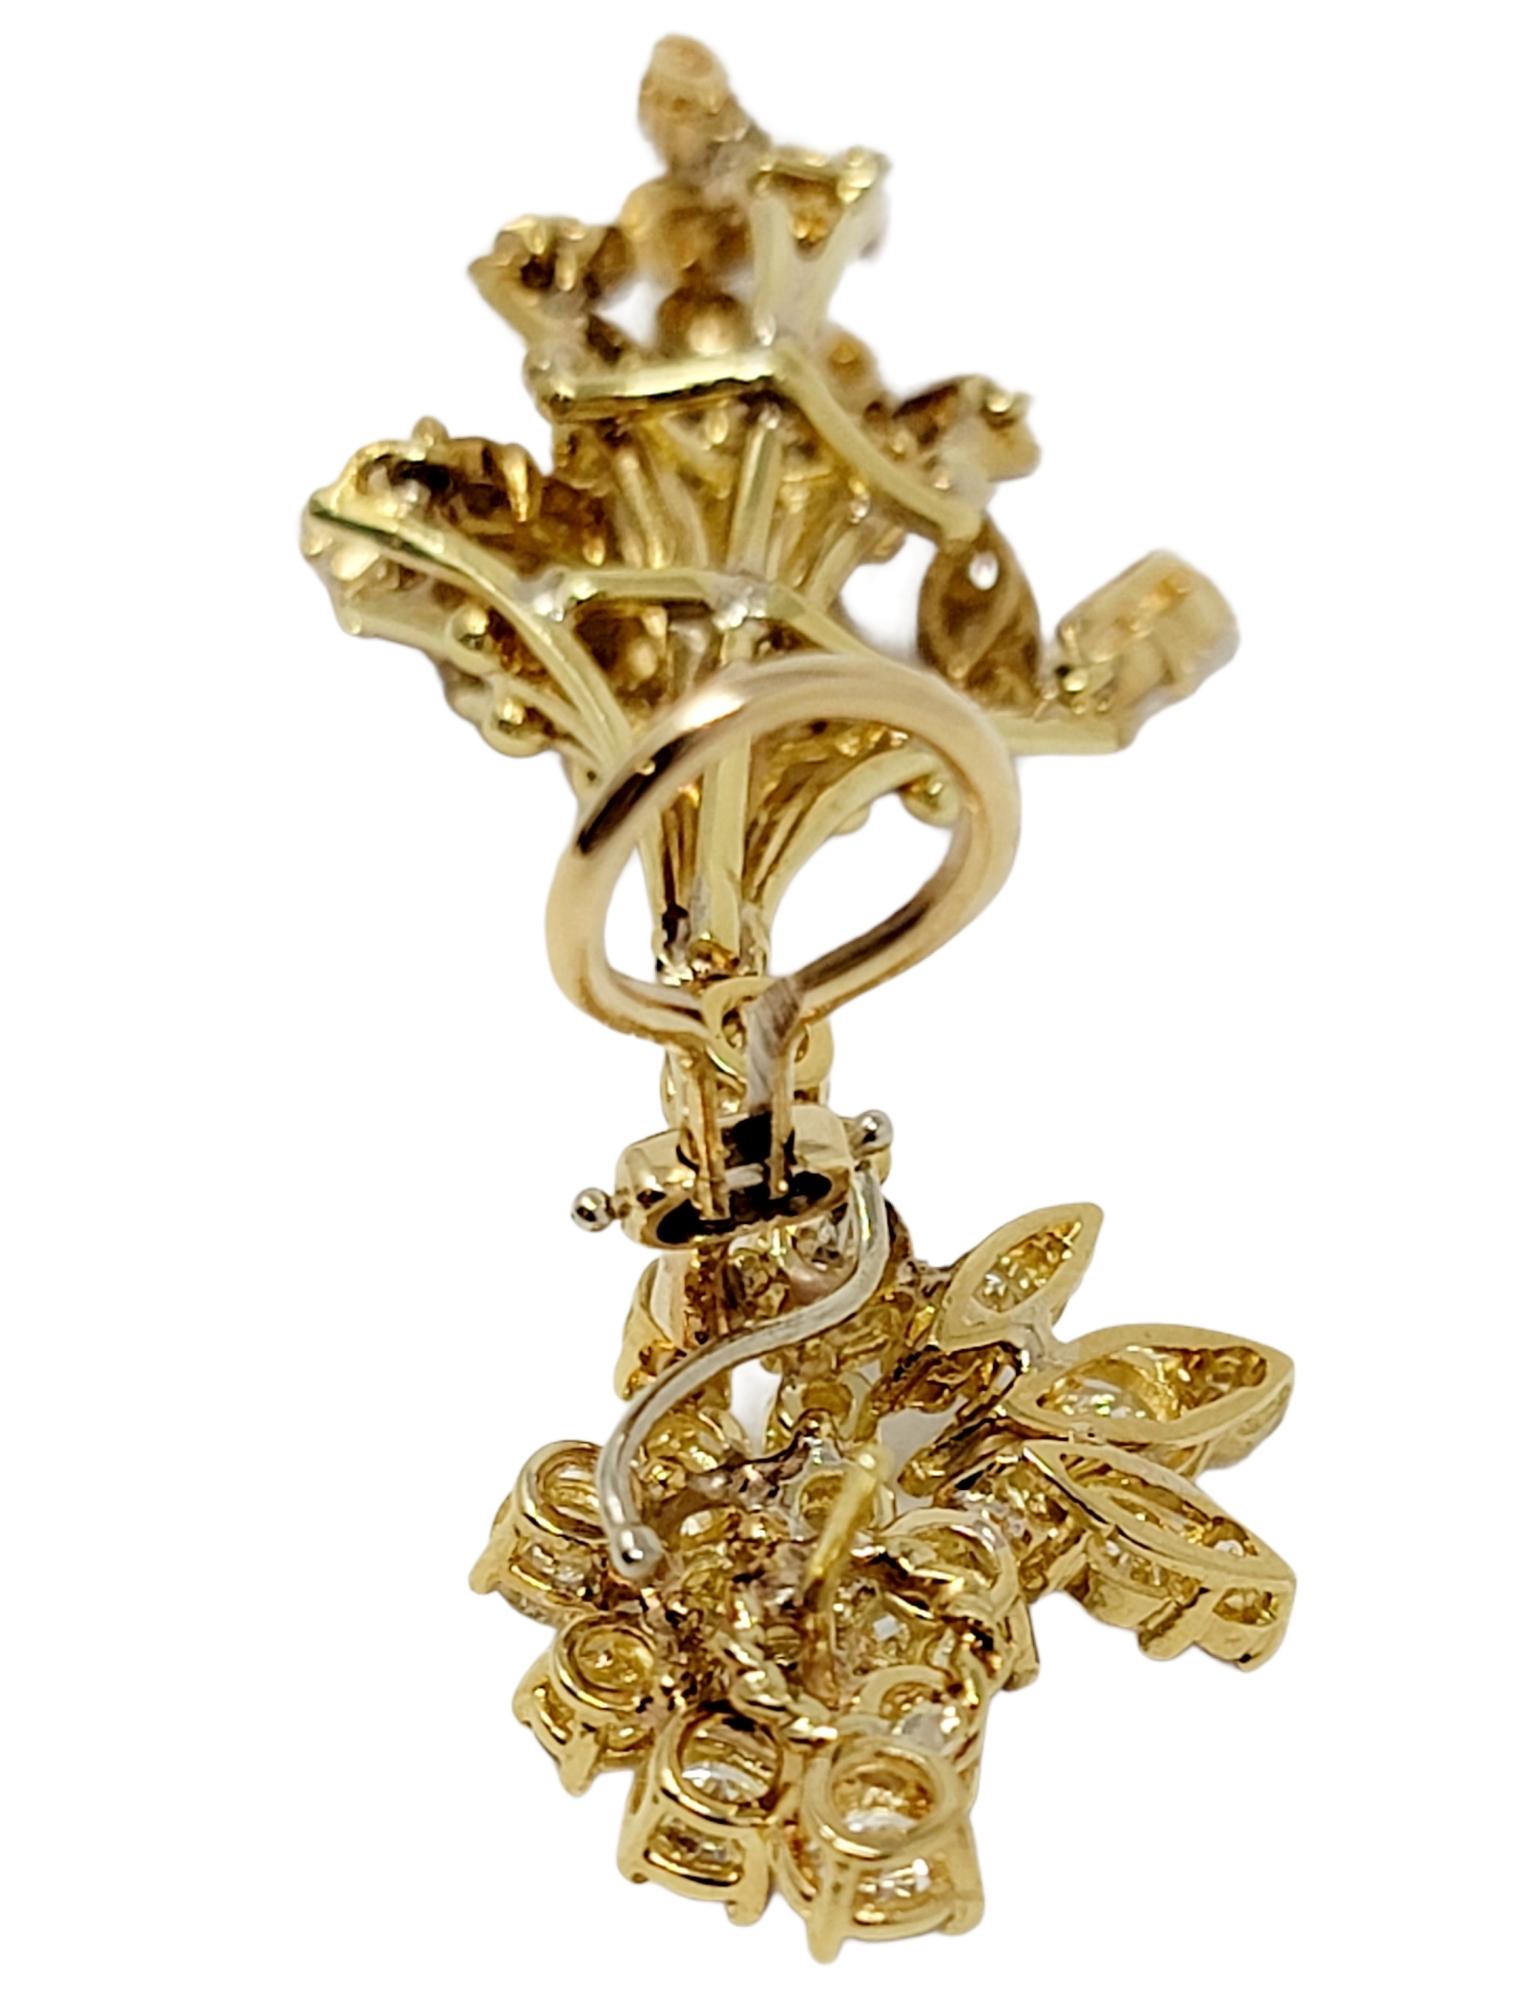 Dangling Chandelier Earrings in 18 Karat Gold 11.59 Carats Total Round Diamonds For Sale 2